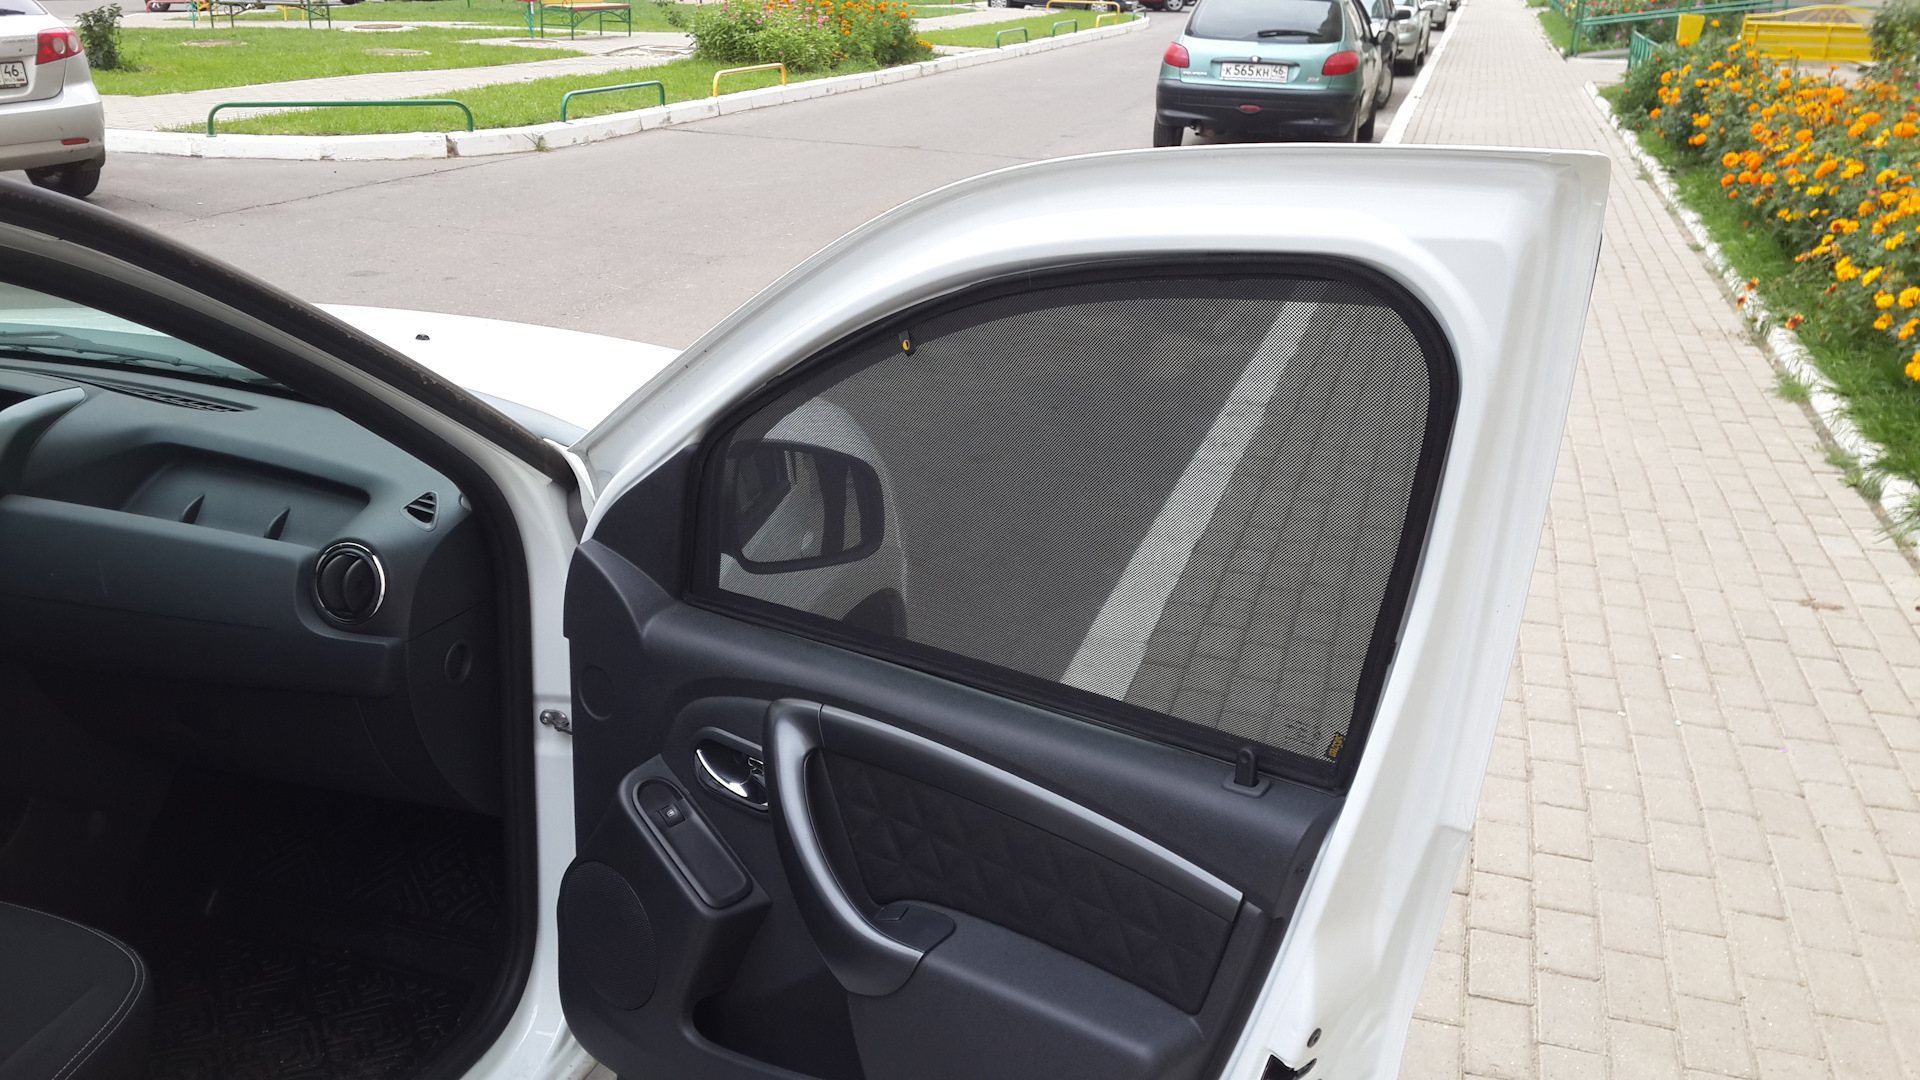 Шторки дастер. Шторки для Renault Duster. Шторки в Рено Дастер 2. Шторки на стекла Рено Дастер 2019. Рено Дастер 2 со шторками на передних окнах.